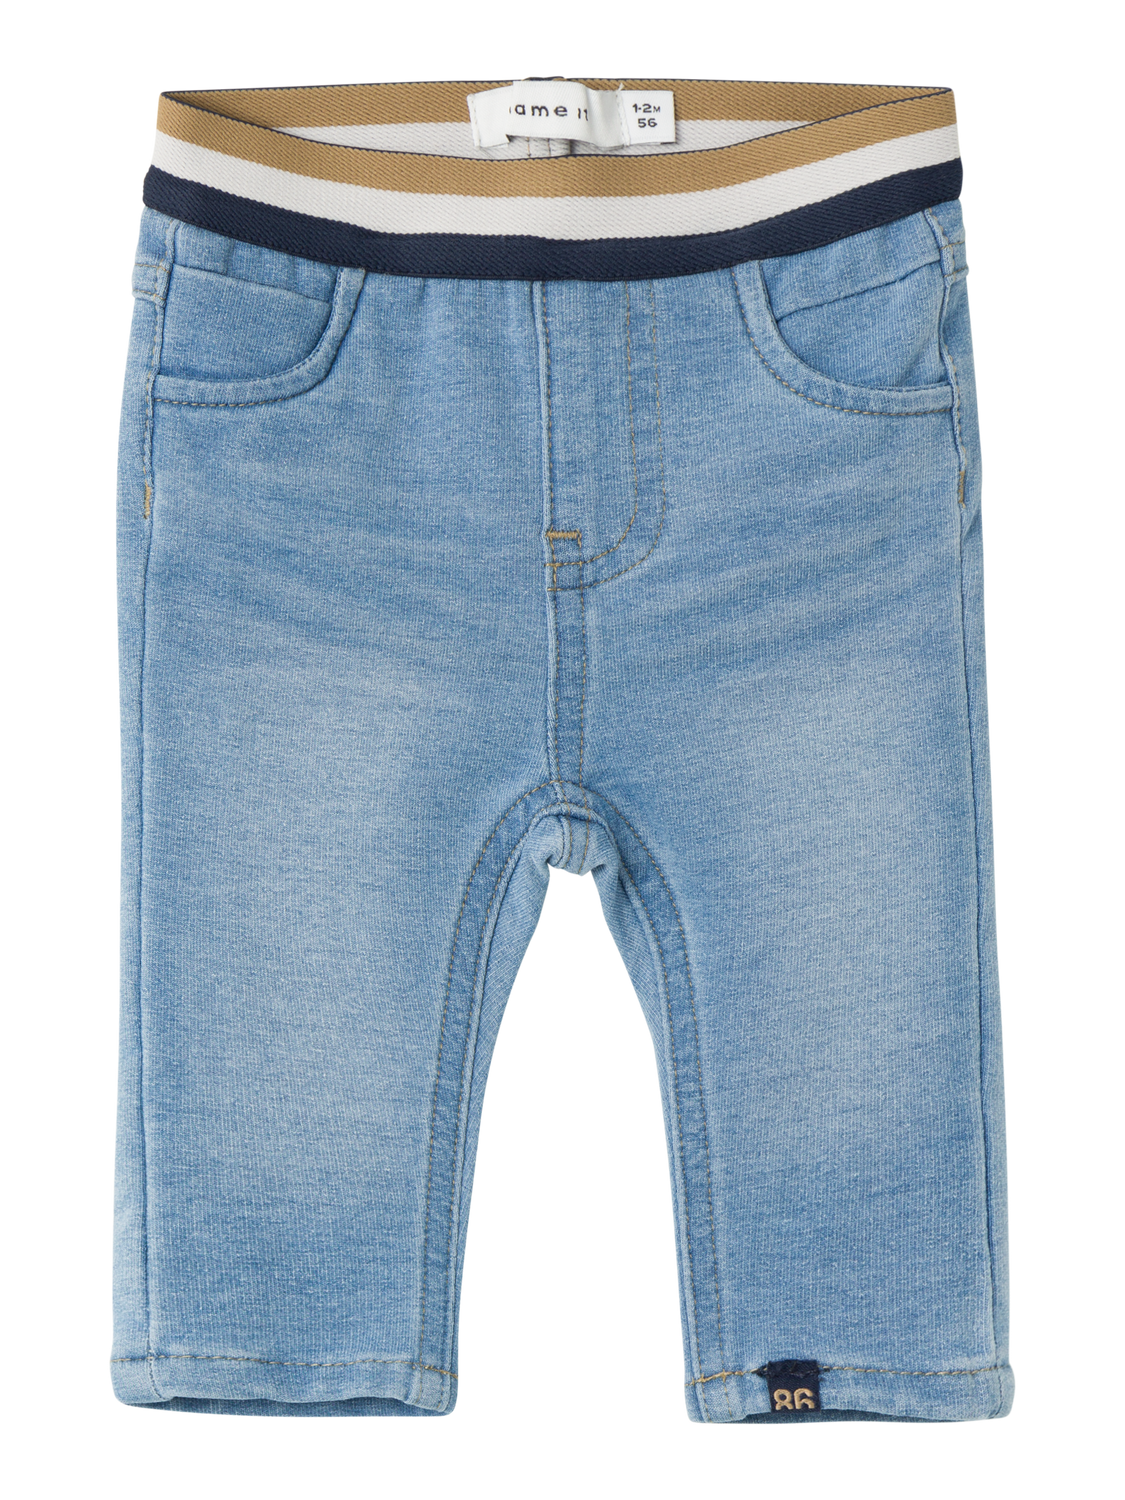 NBMSILAS Jeans - Light Blue Denim